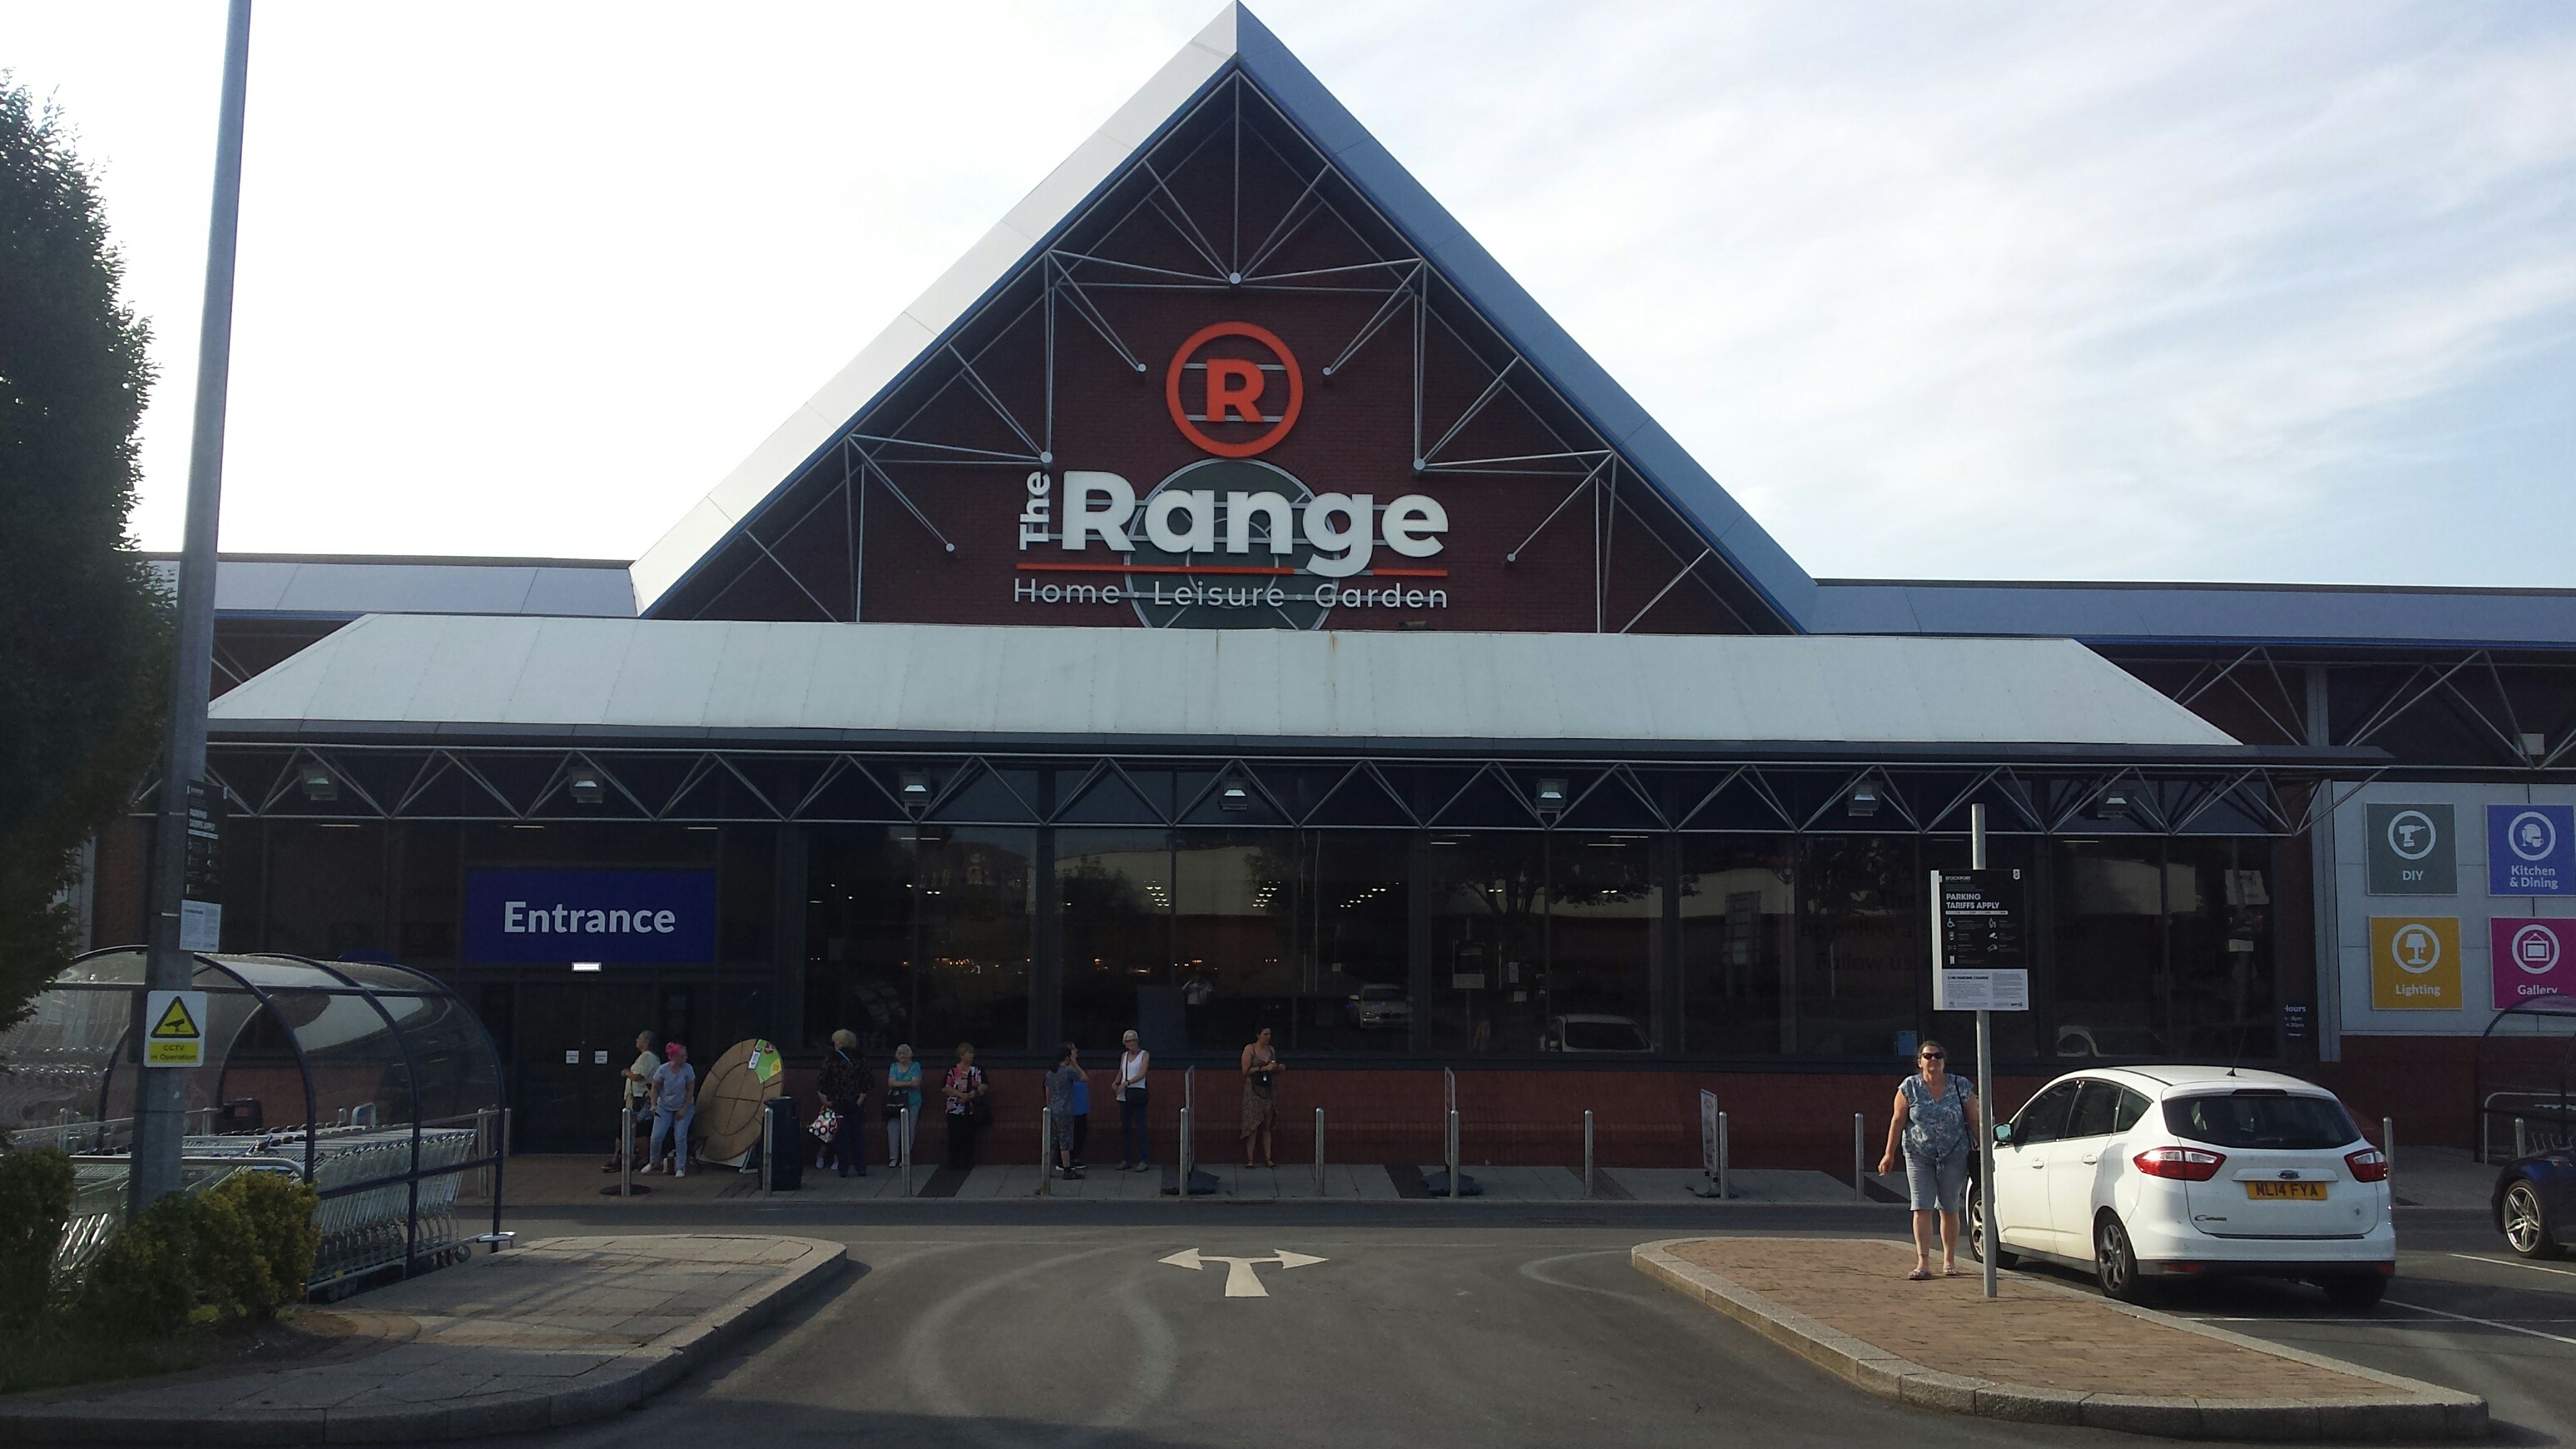 The Range at Stockport Retail Park